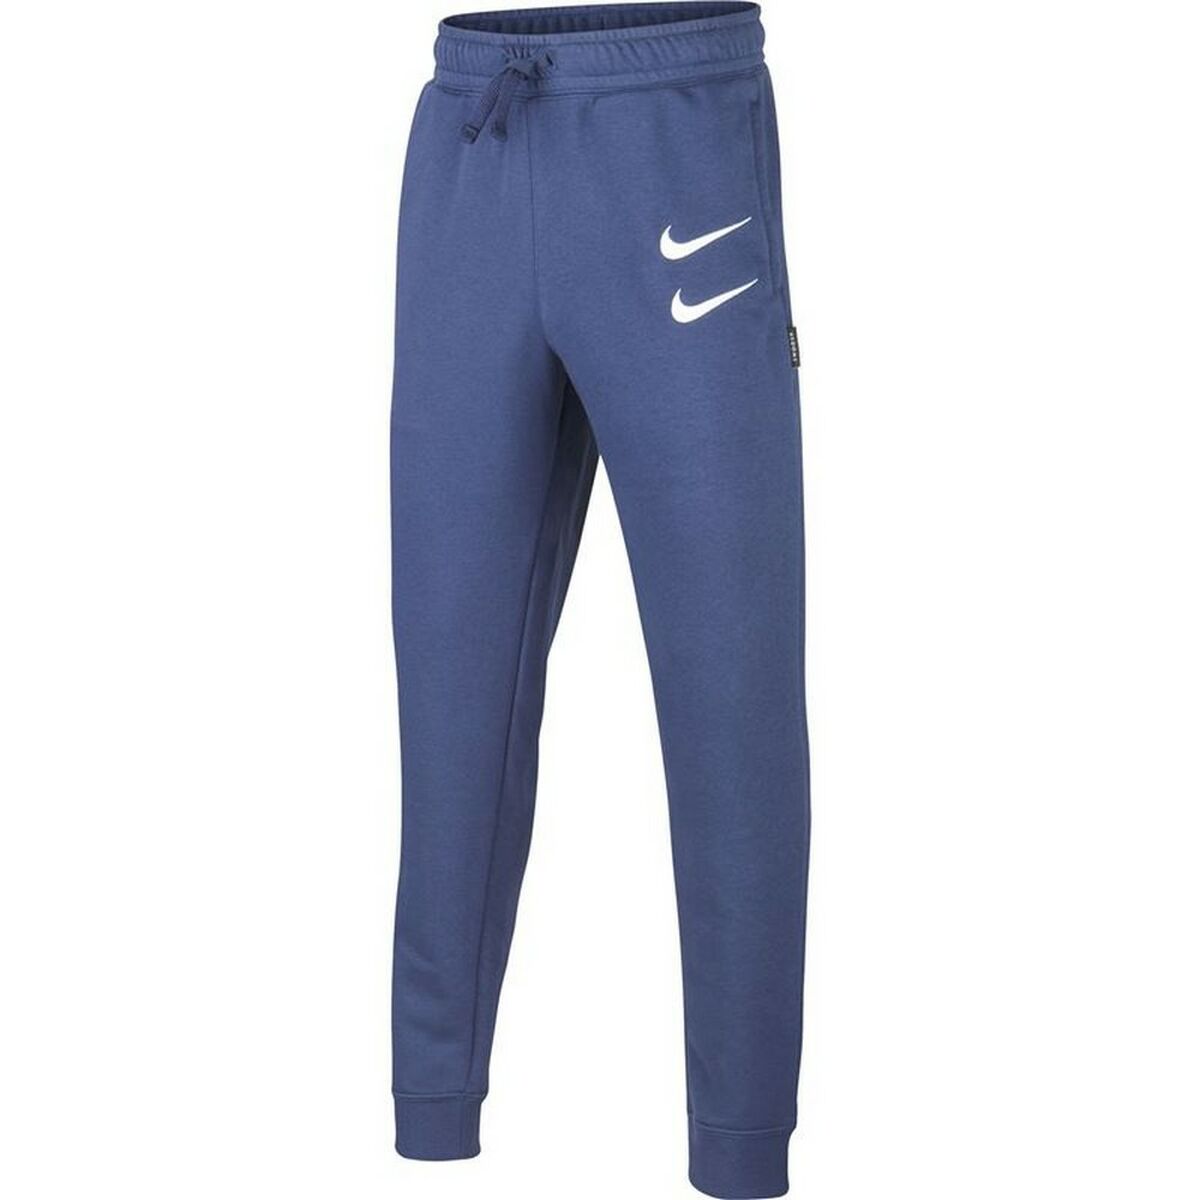 Pantalone Lungo Sportivo Nike Swoosh Blu scuro